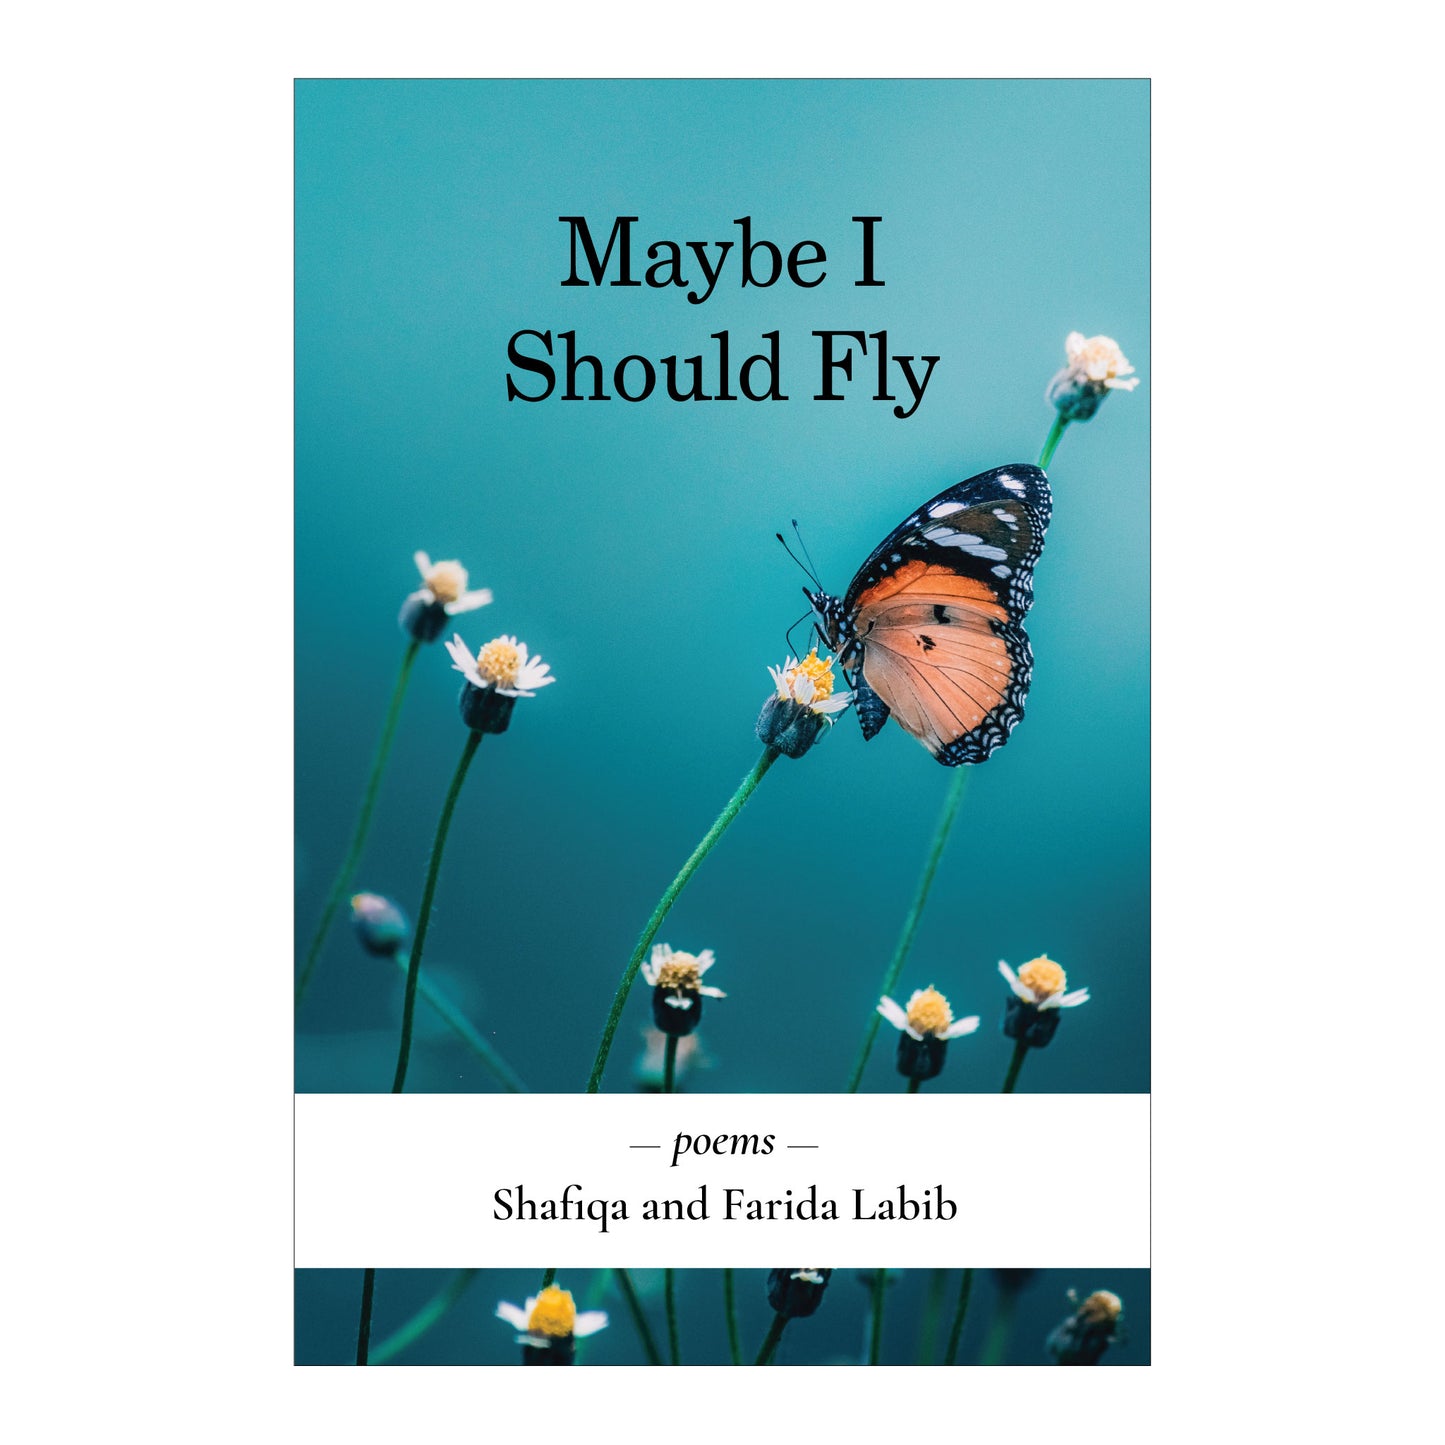 Maybe I Should Fly by Shafiqa and Farida Labib